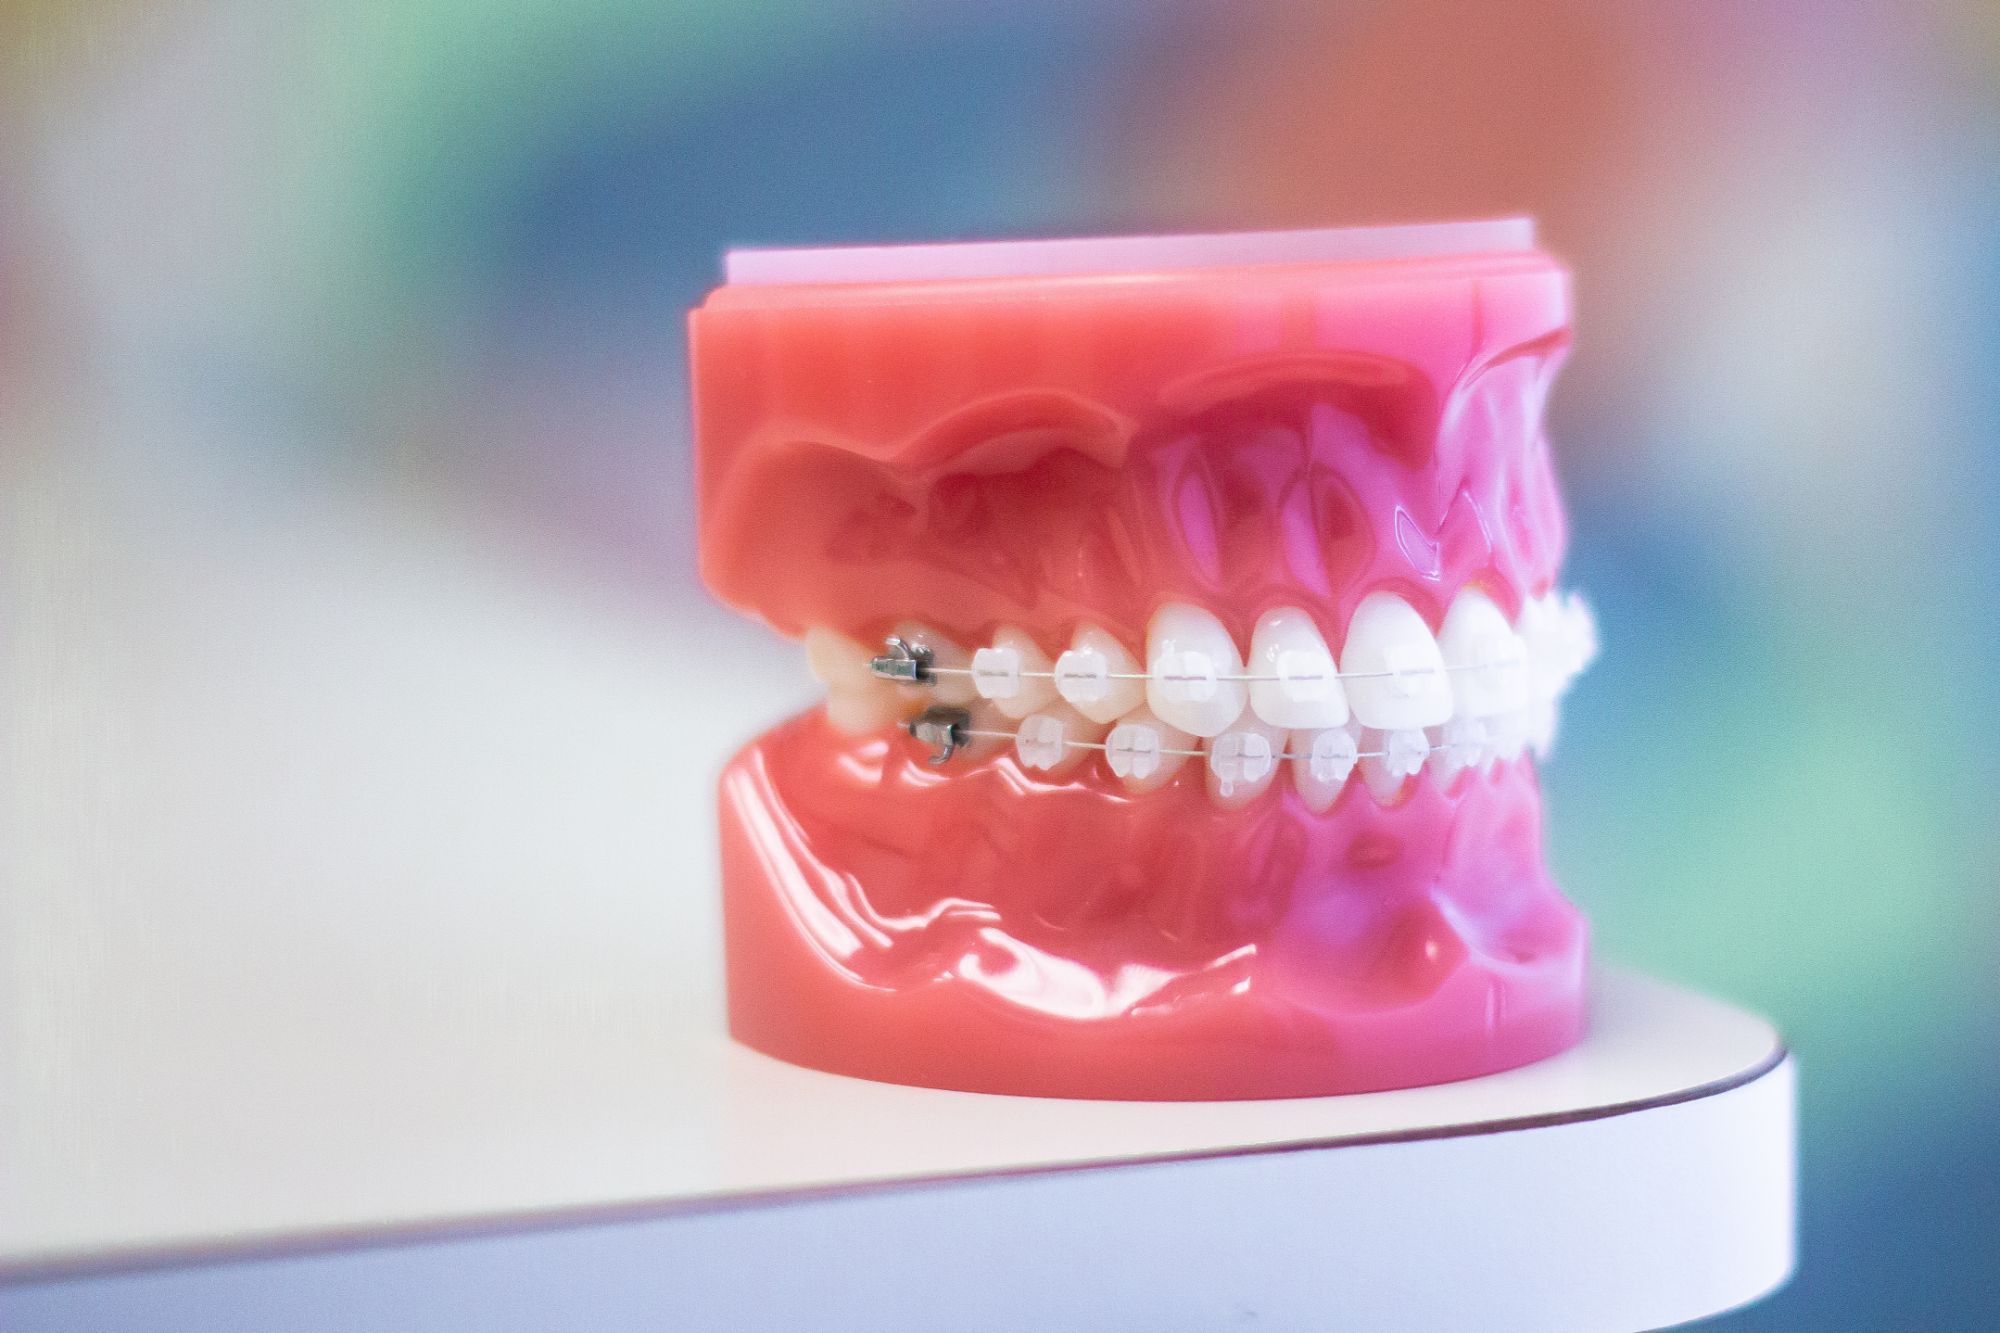 Clear braces on teeth model